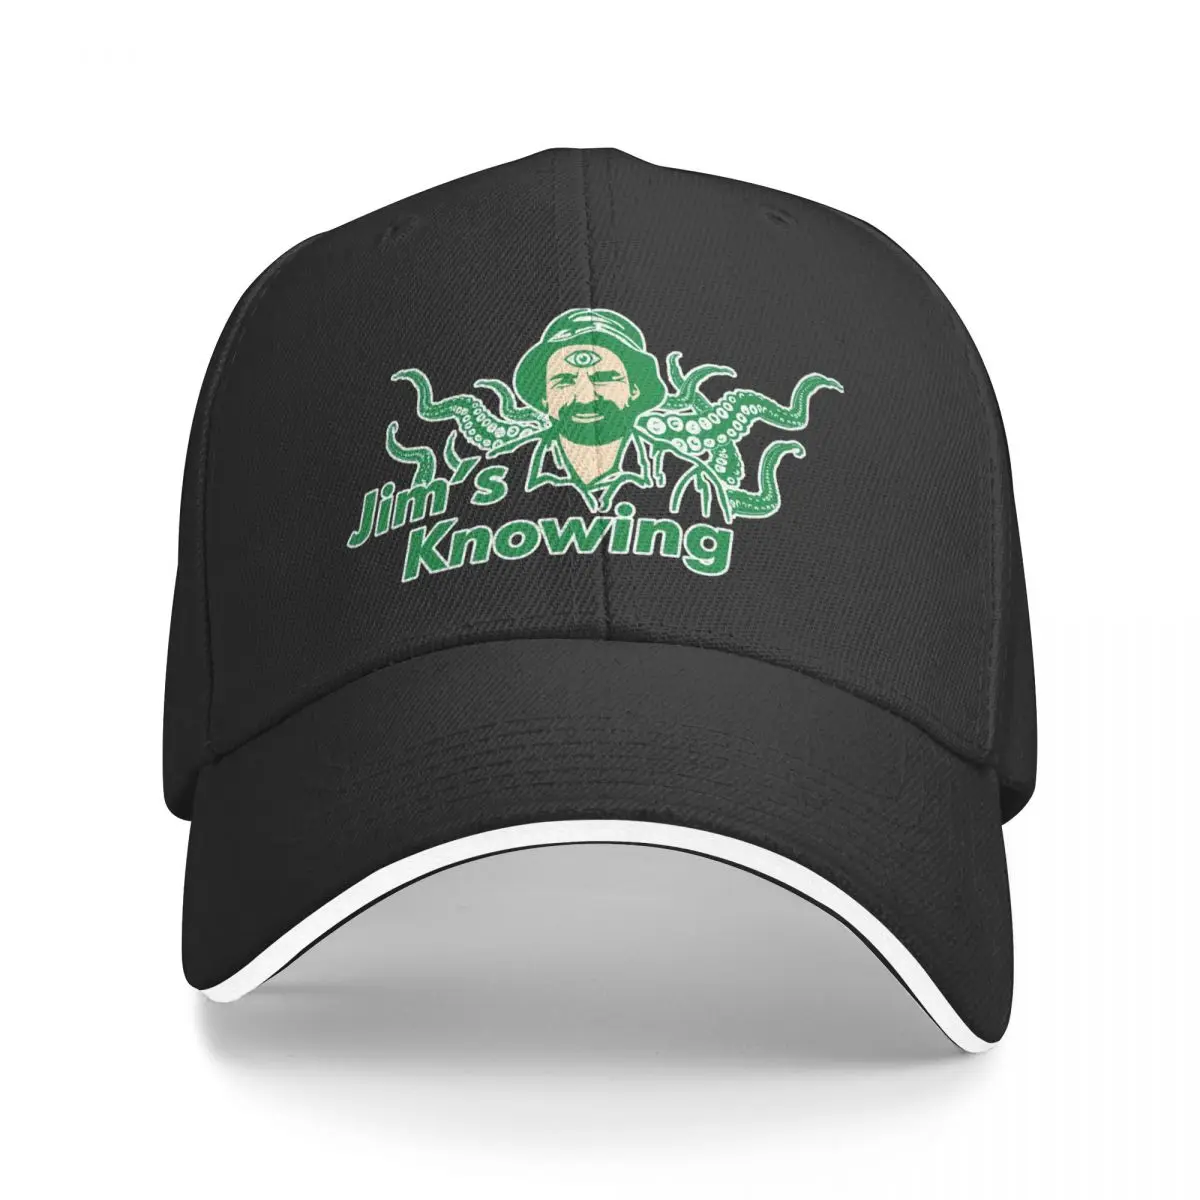 

New Jim's Knowing Baseball Cap Beach Outing Big Size Hat Trucker Hat Caps Cap For Women Men's